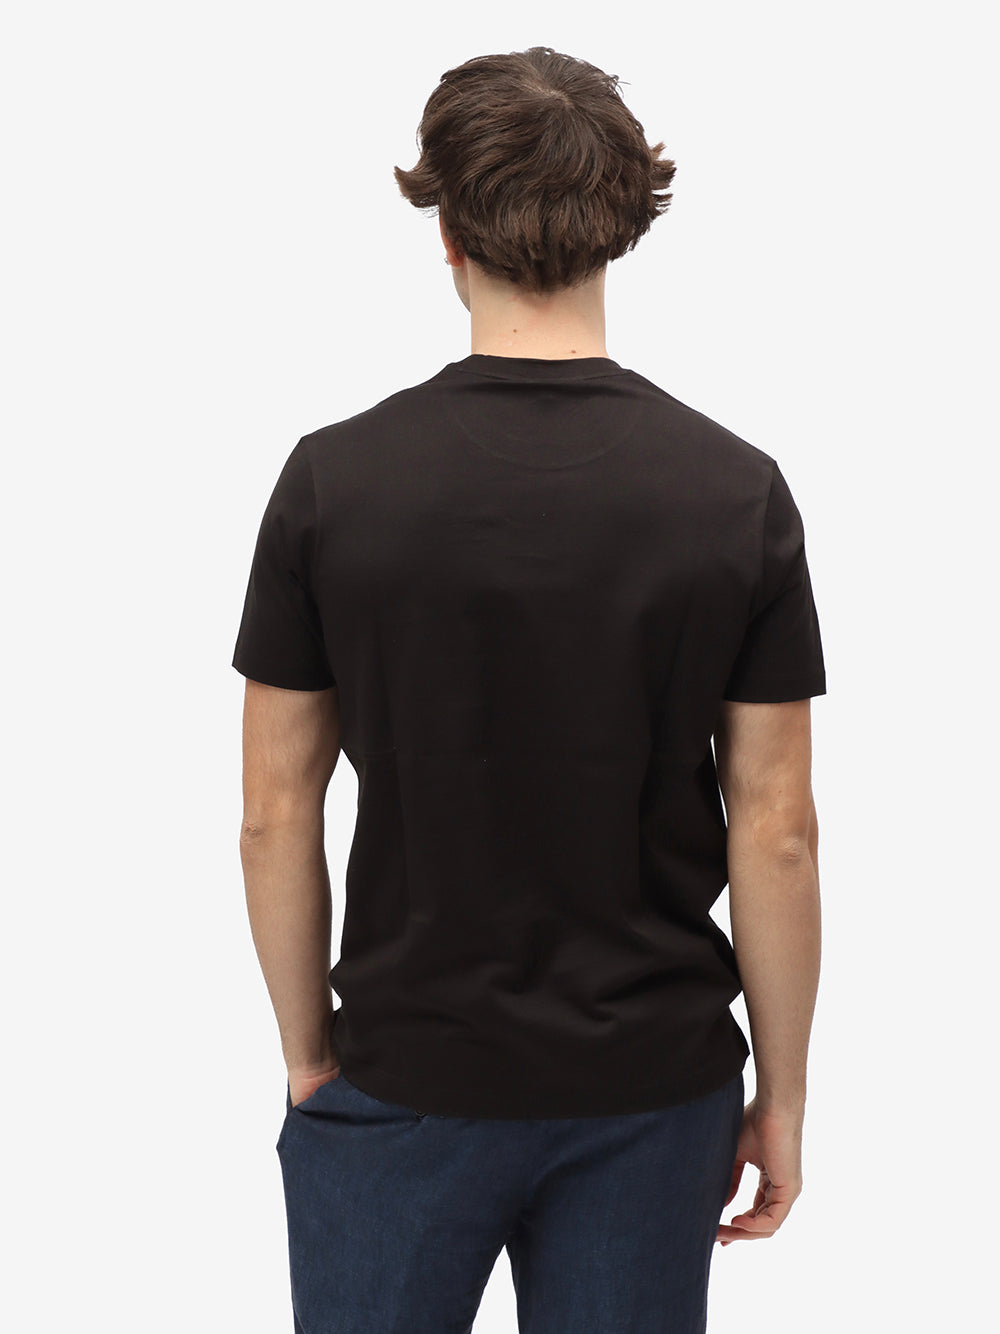 PAUL & SHARK T-Shirt Uomo Cotone Logo Lettering-Nero